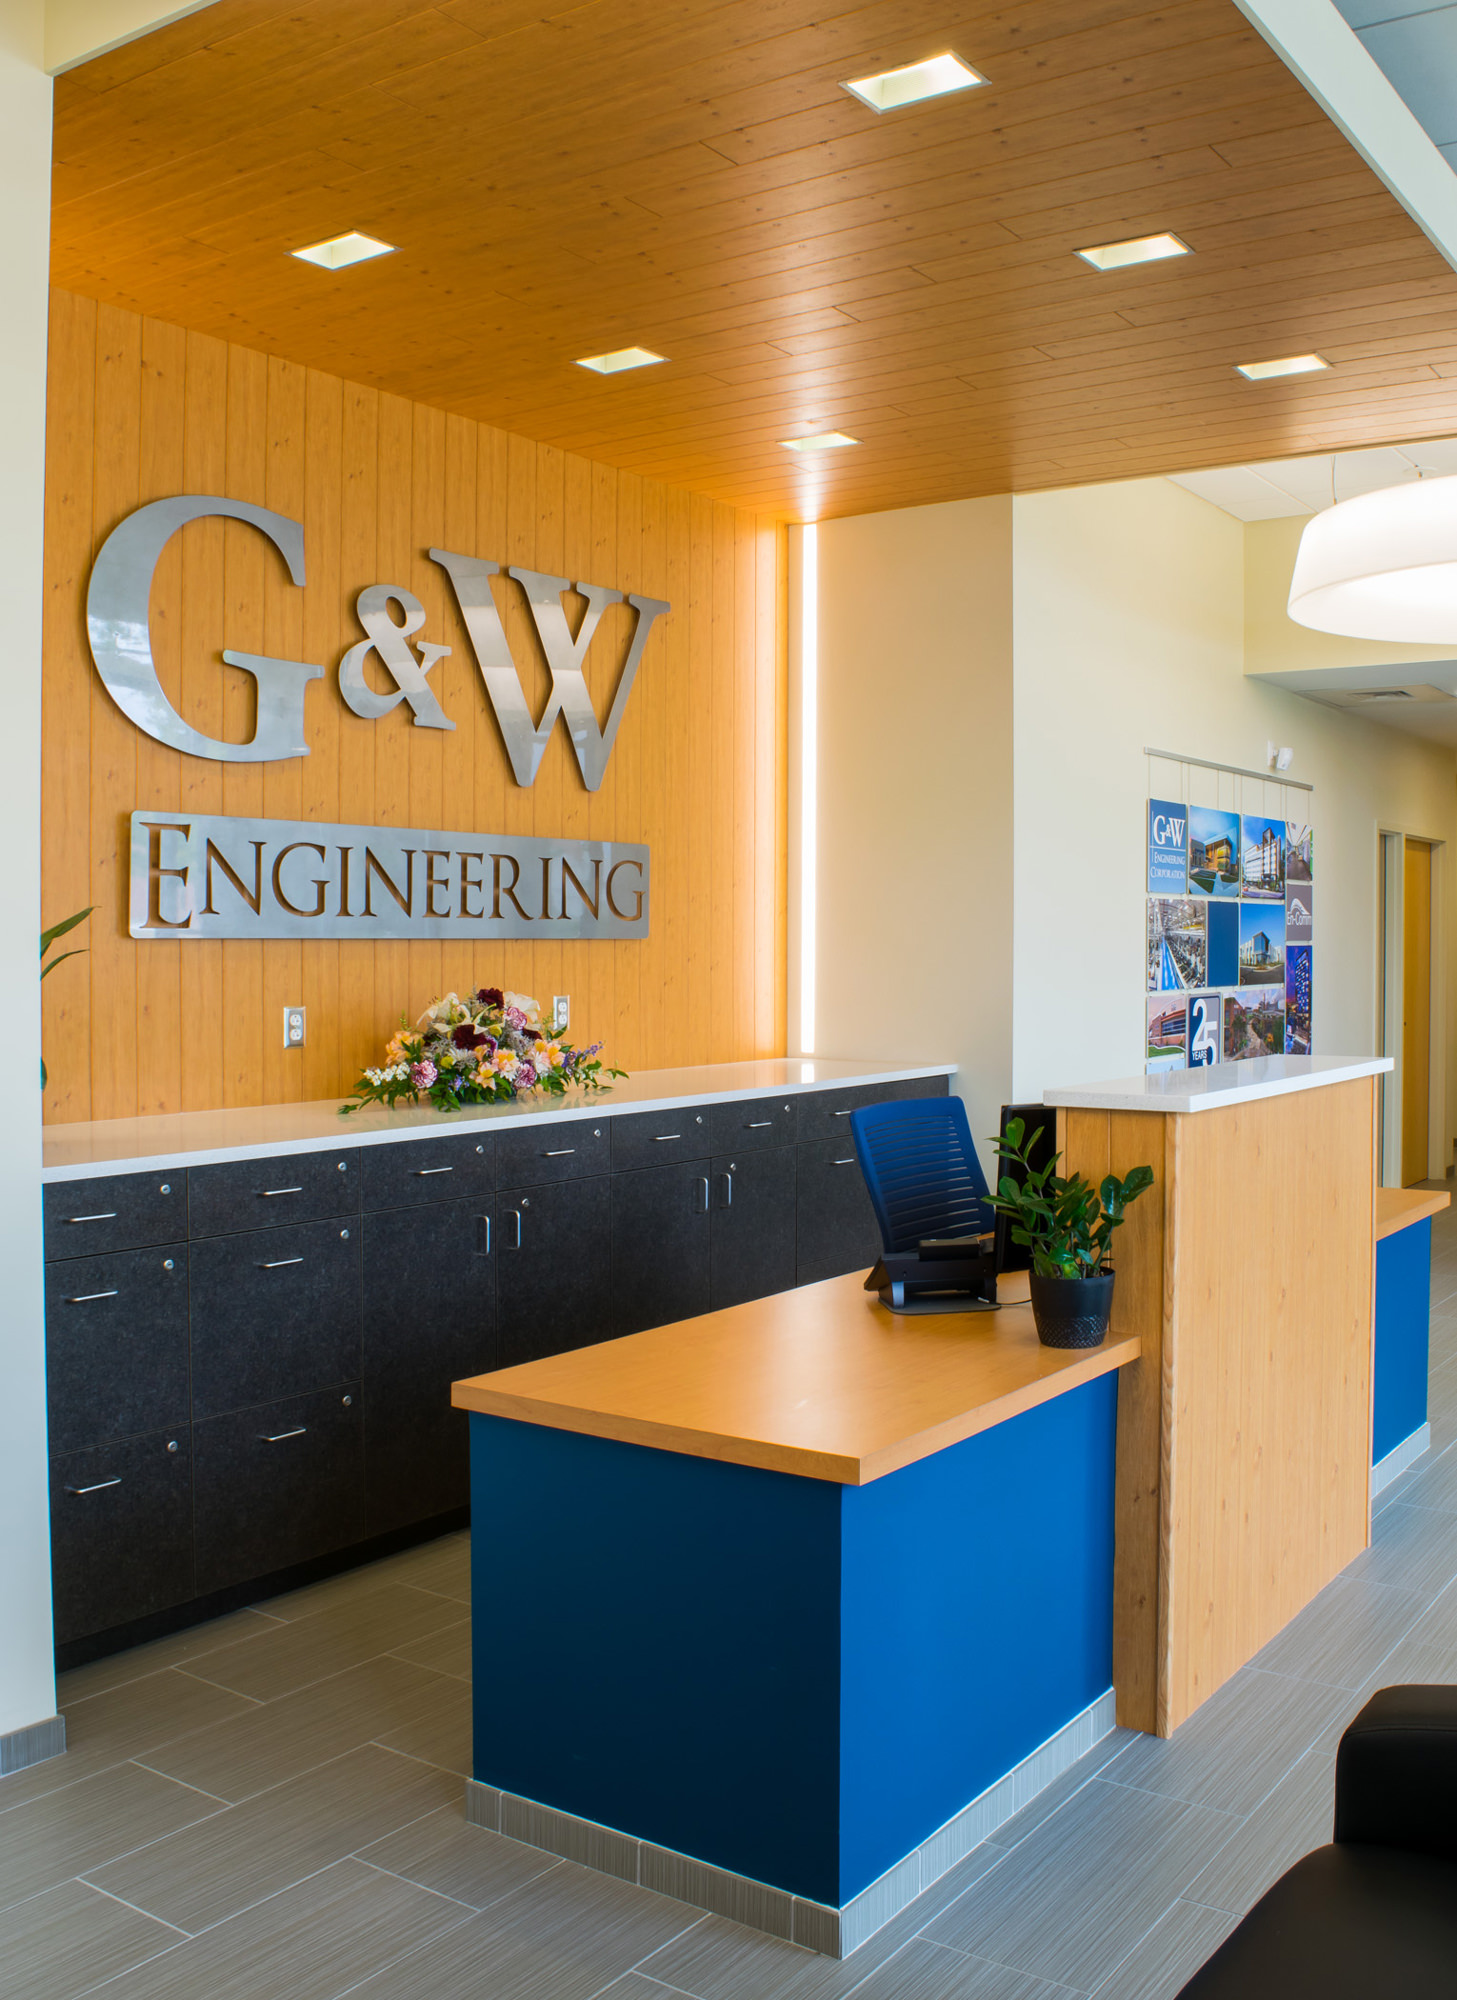 G&W Engineering Corporation